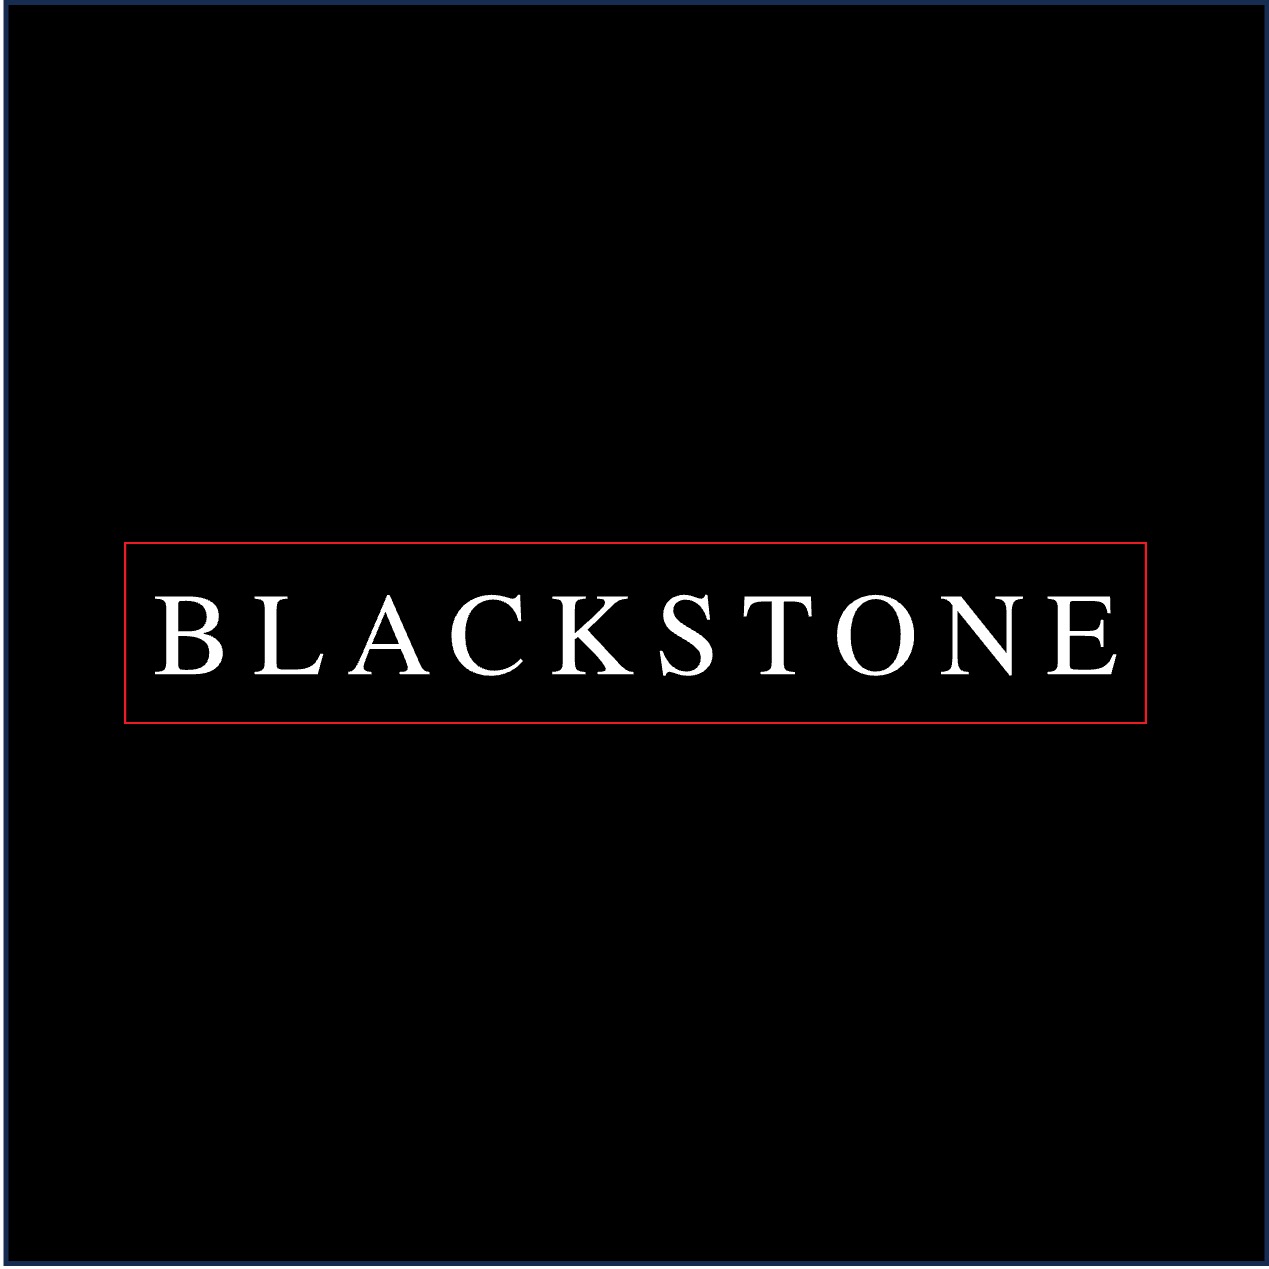 Blackstone Caterers